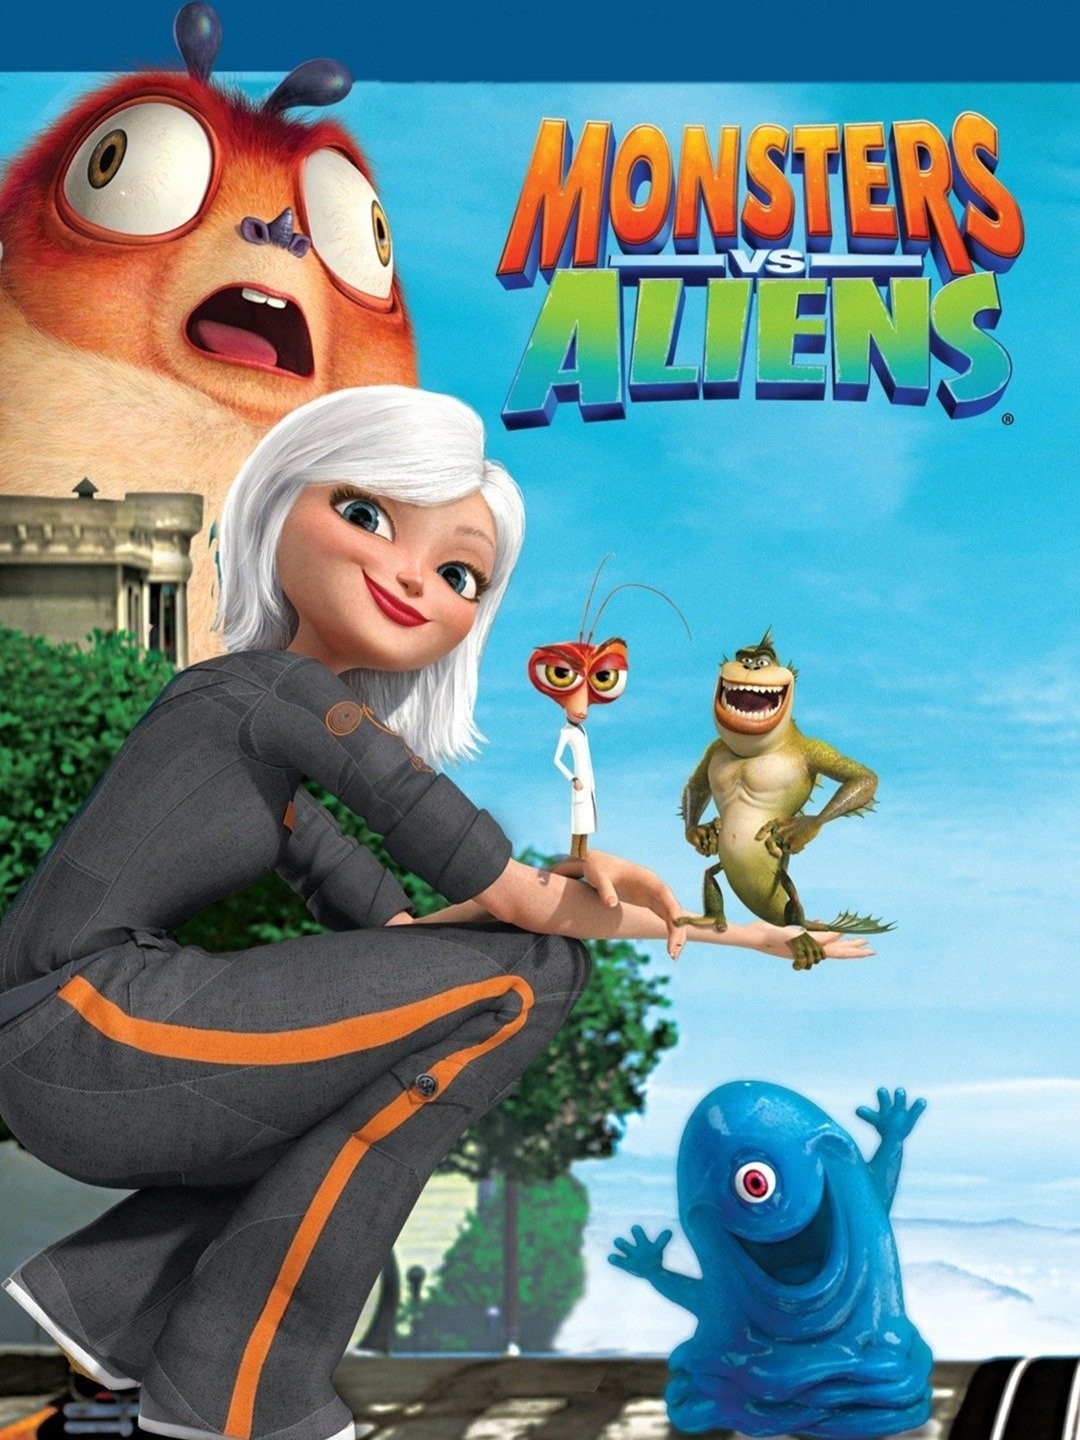 Monsters vs Aliens (2009) directed by Conrad Vernon, Rob Letterman